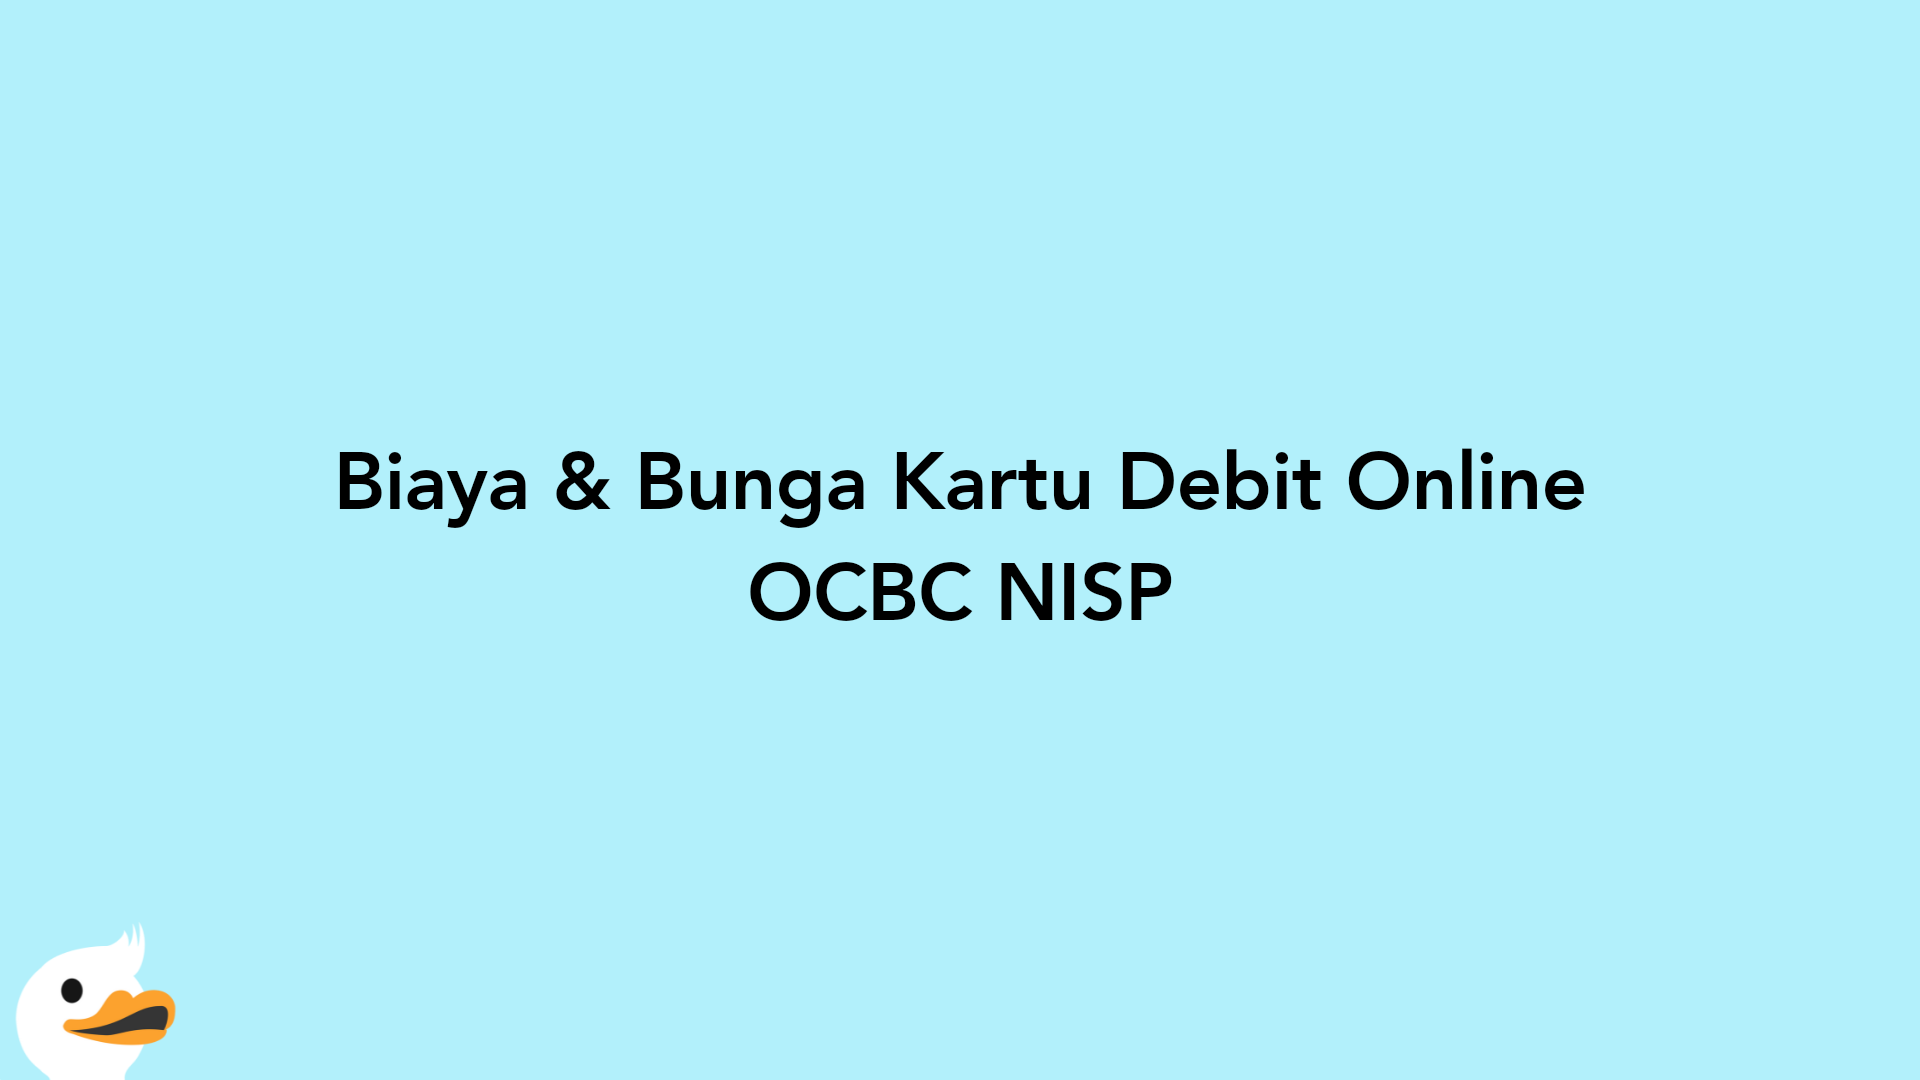 Biaya & Bunga Kartu Debit Online OCBC NISP